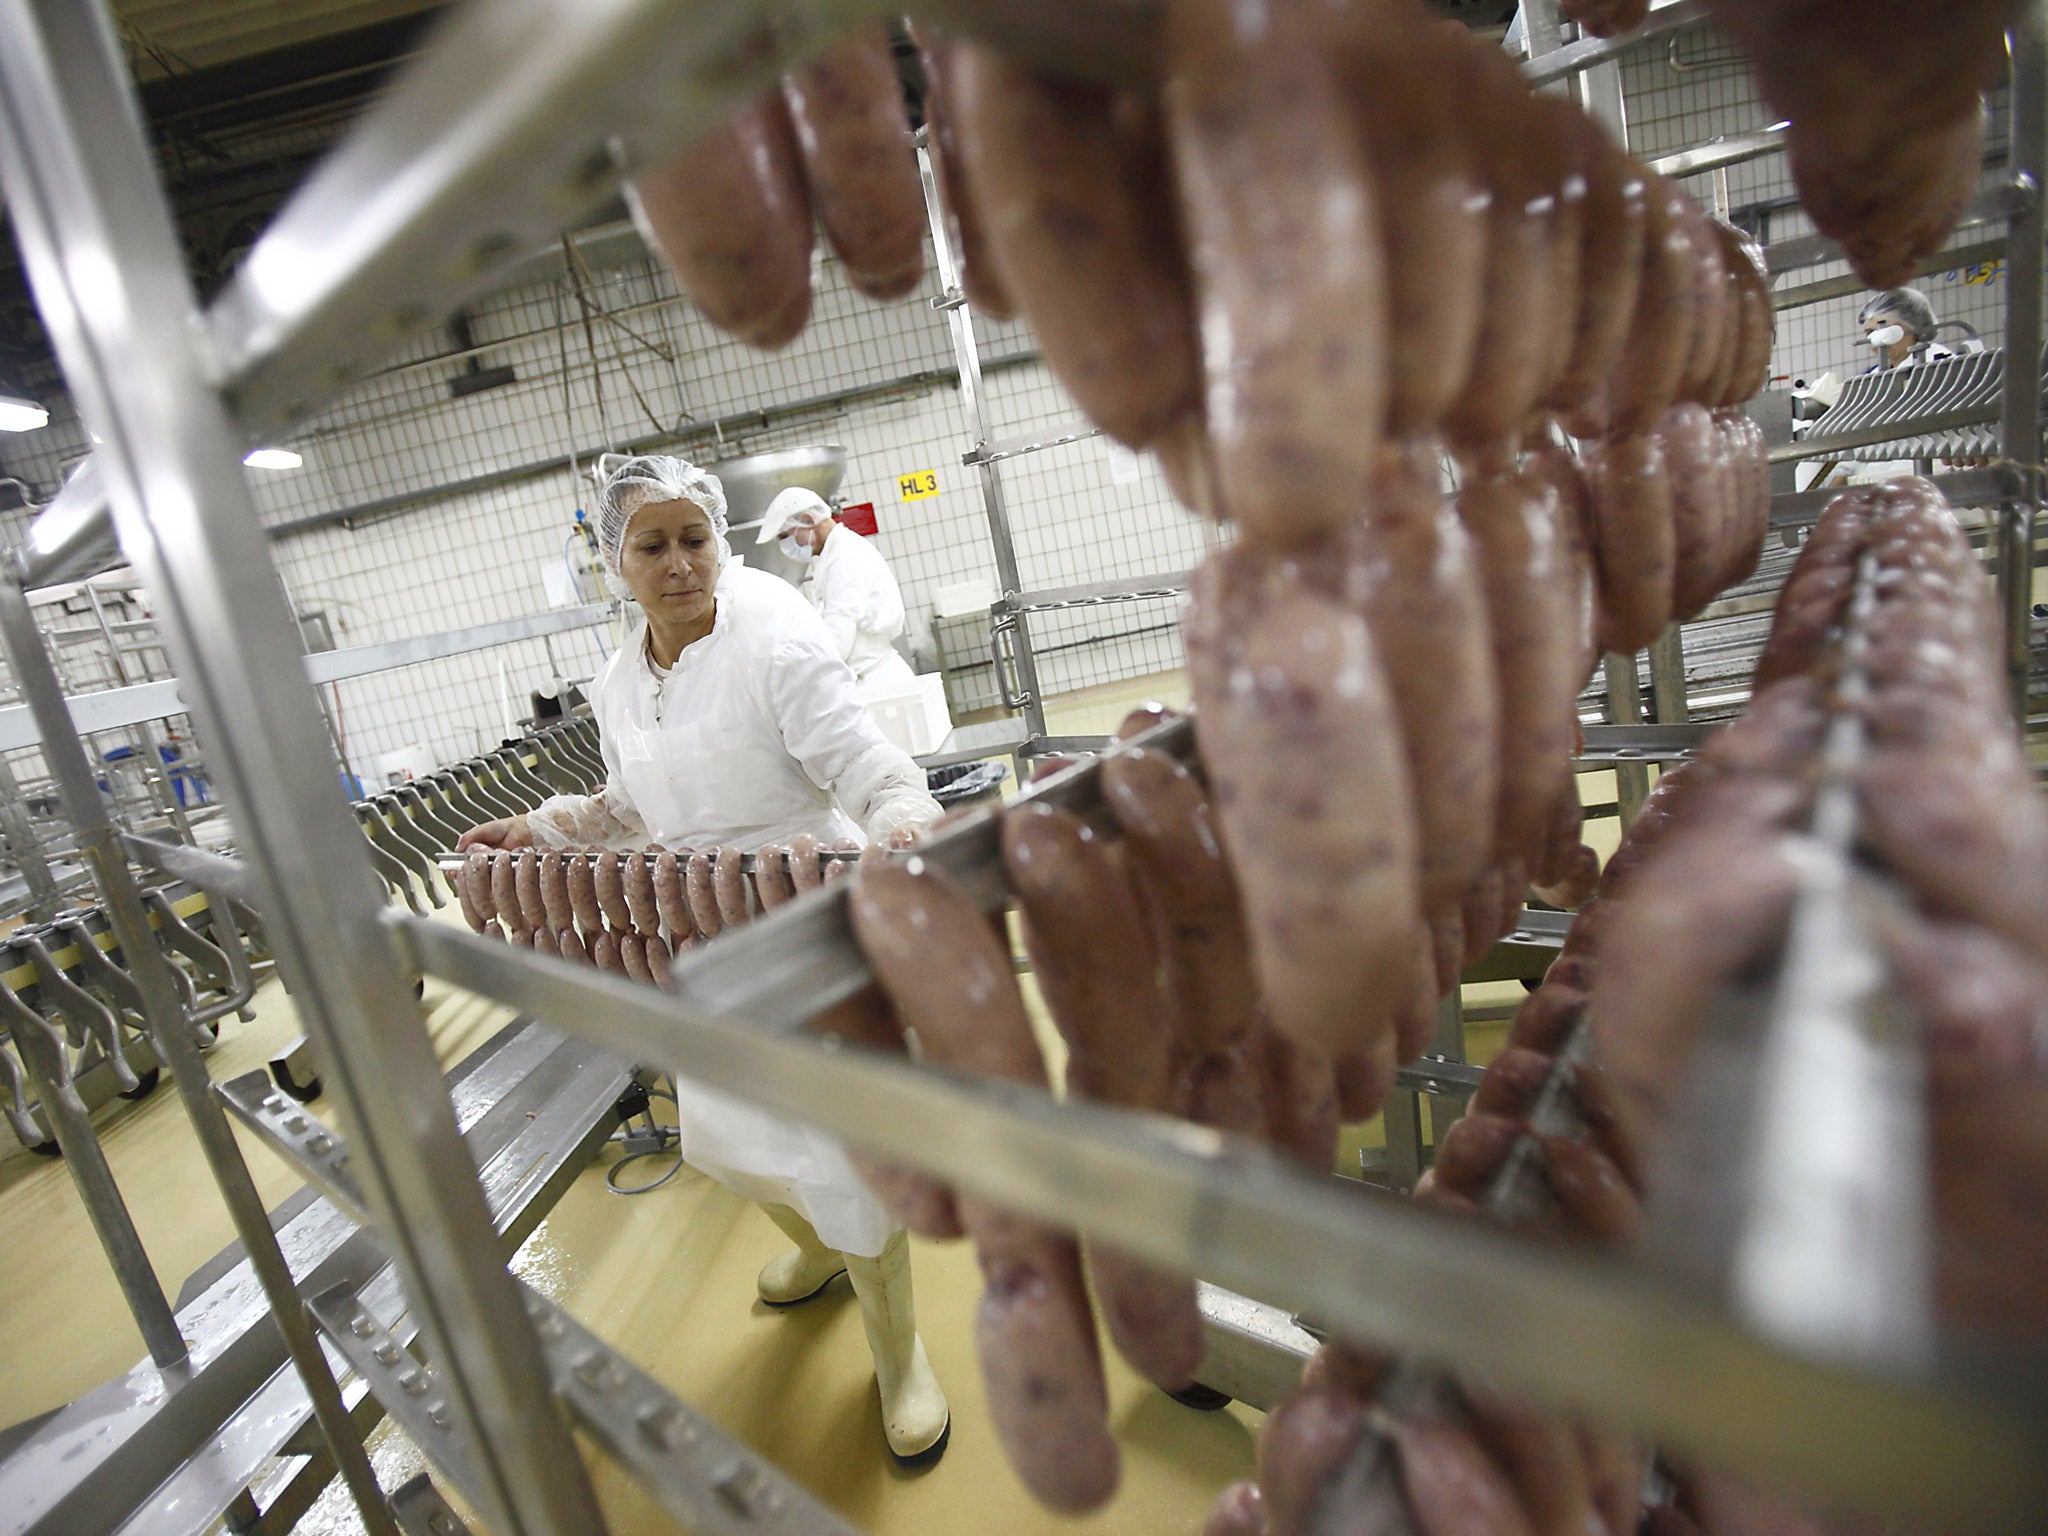 Workers produce Kranjska sausage at a factory in Petrinja, Croatia